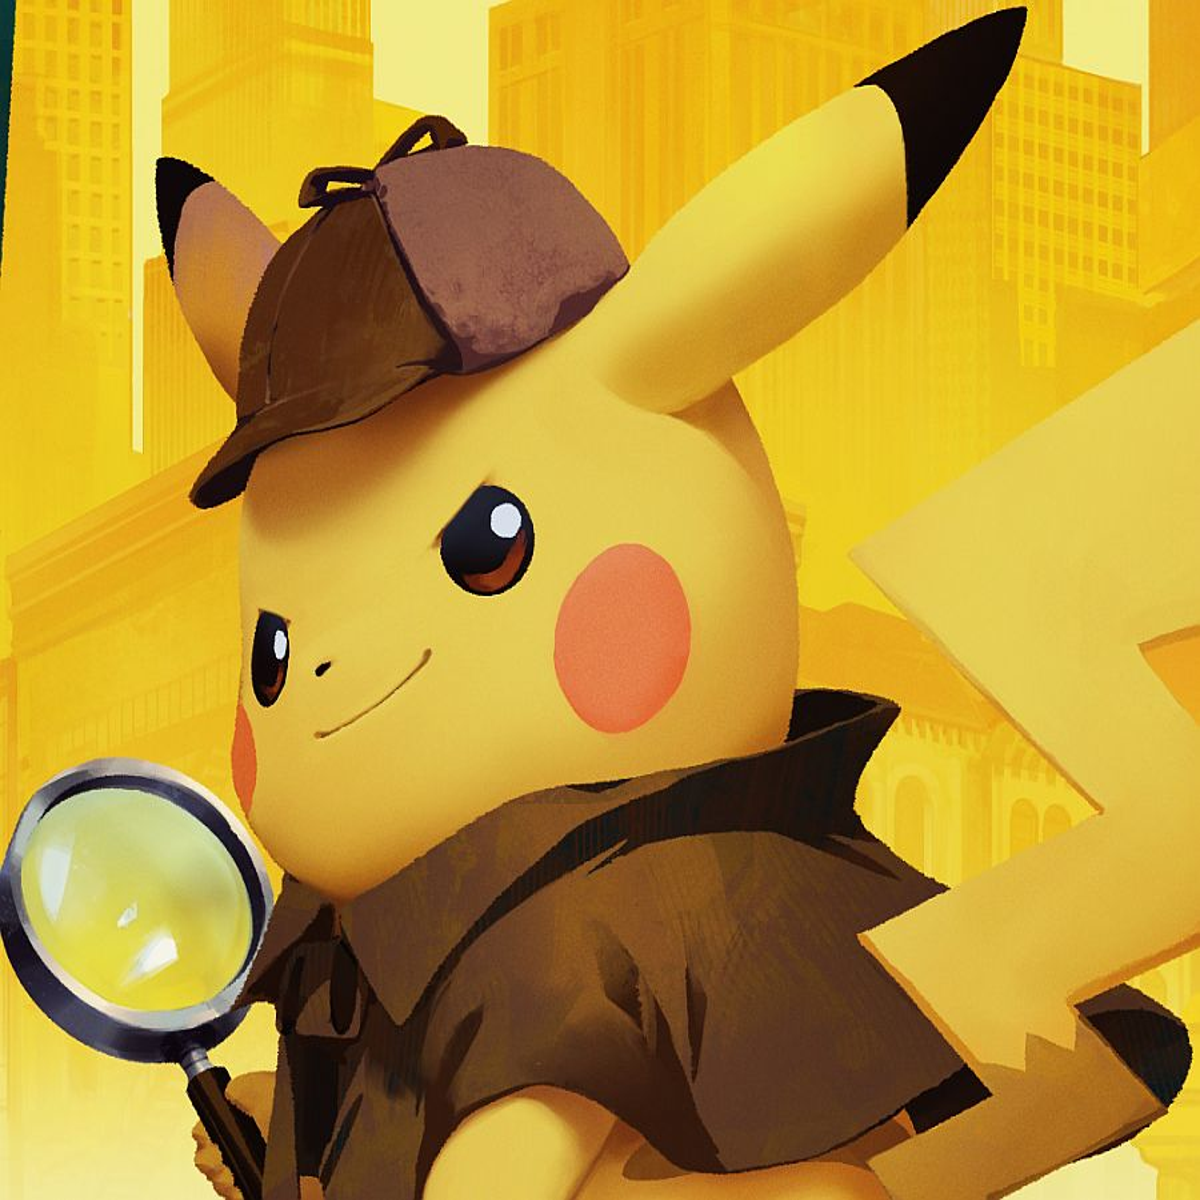 100+] Detective Pikachu Wallpapers